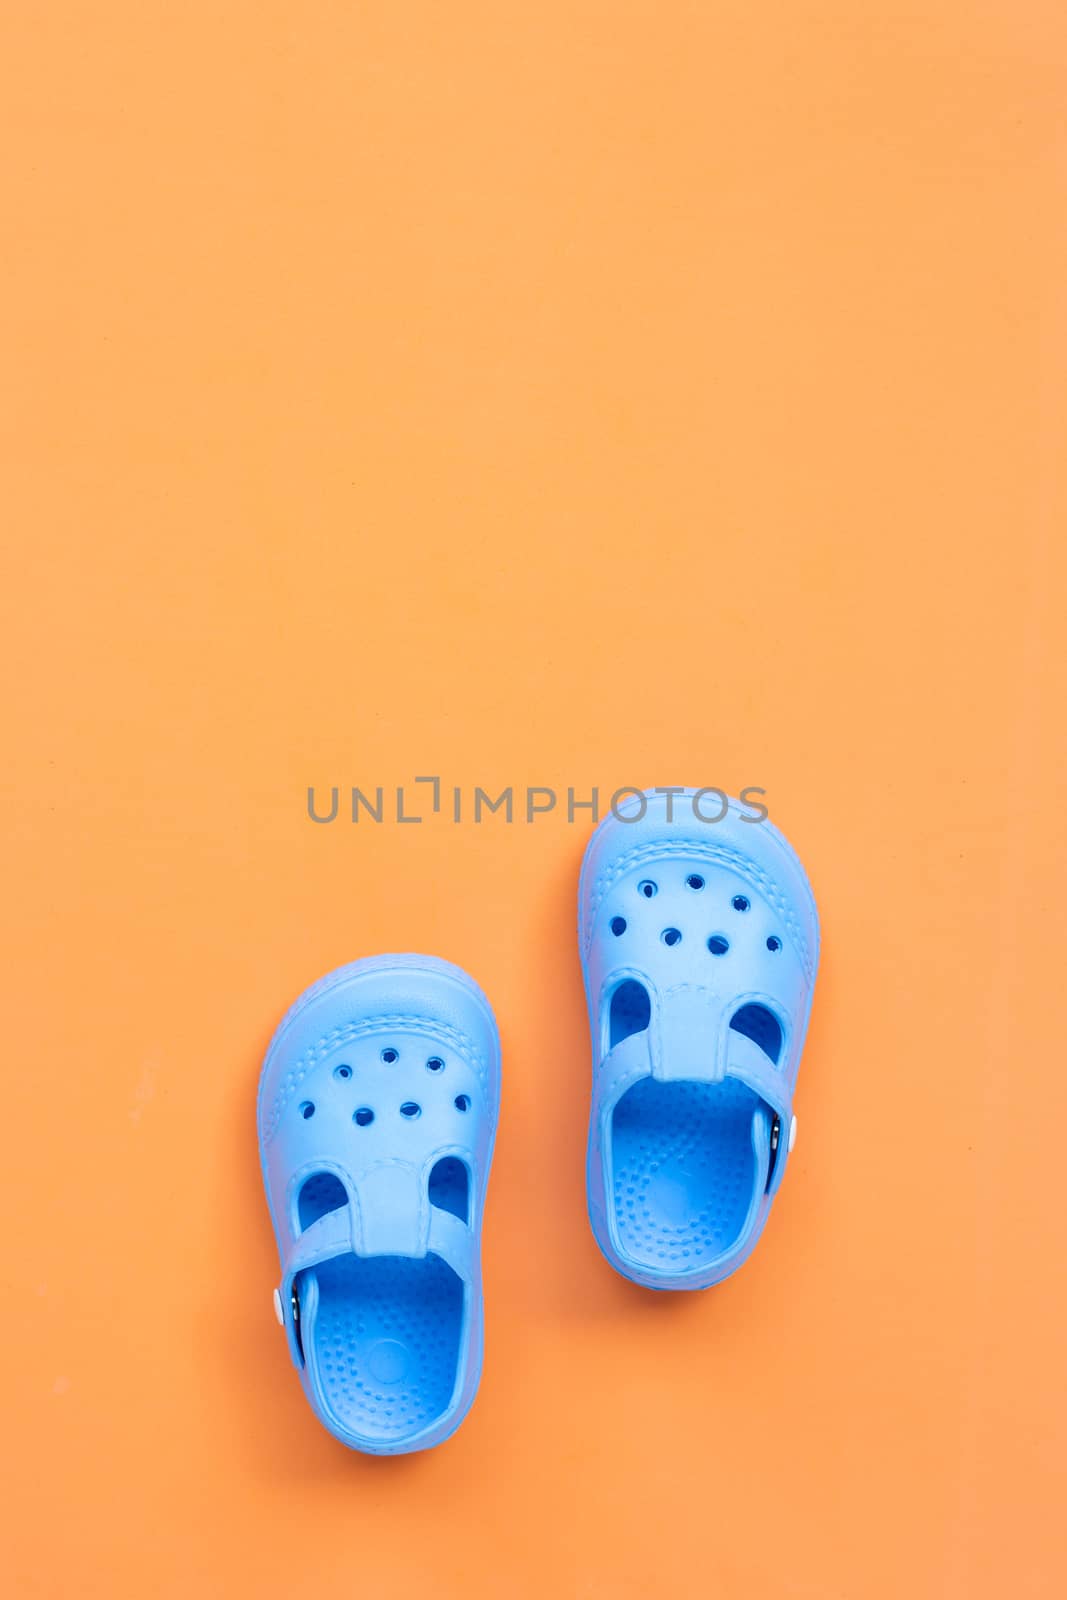 Blue children's rubber sandals on orange background.  by Bowonpat